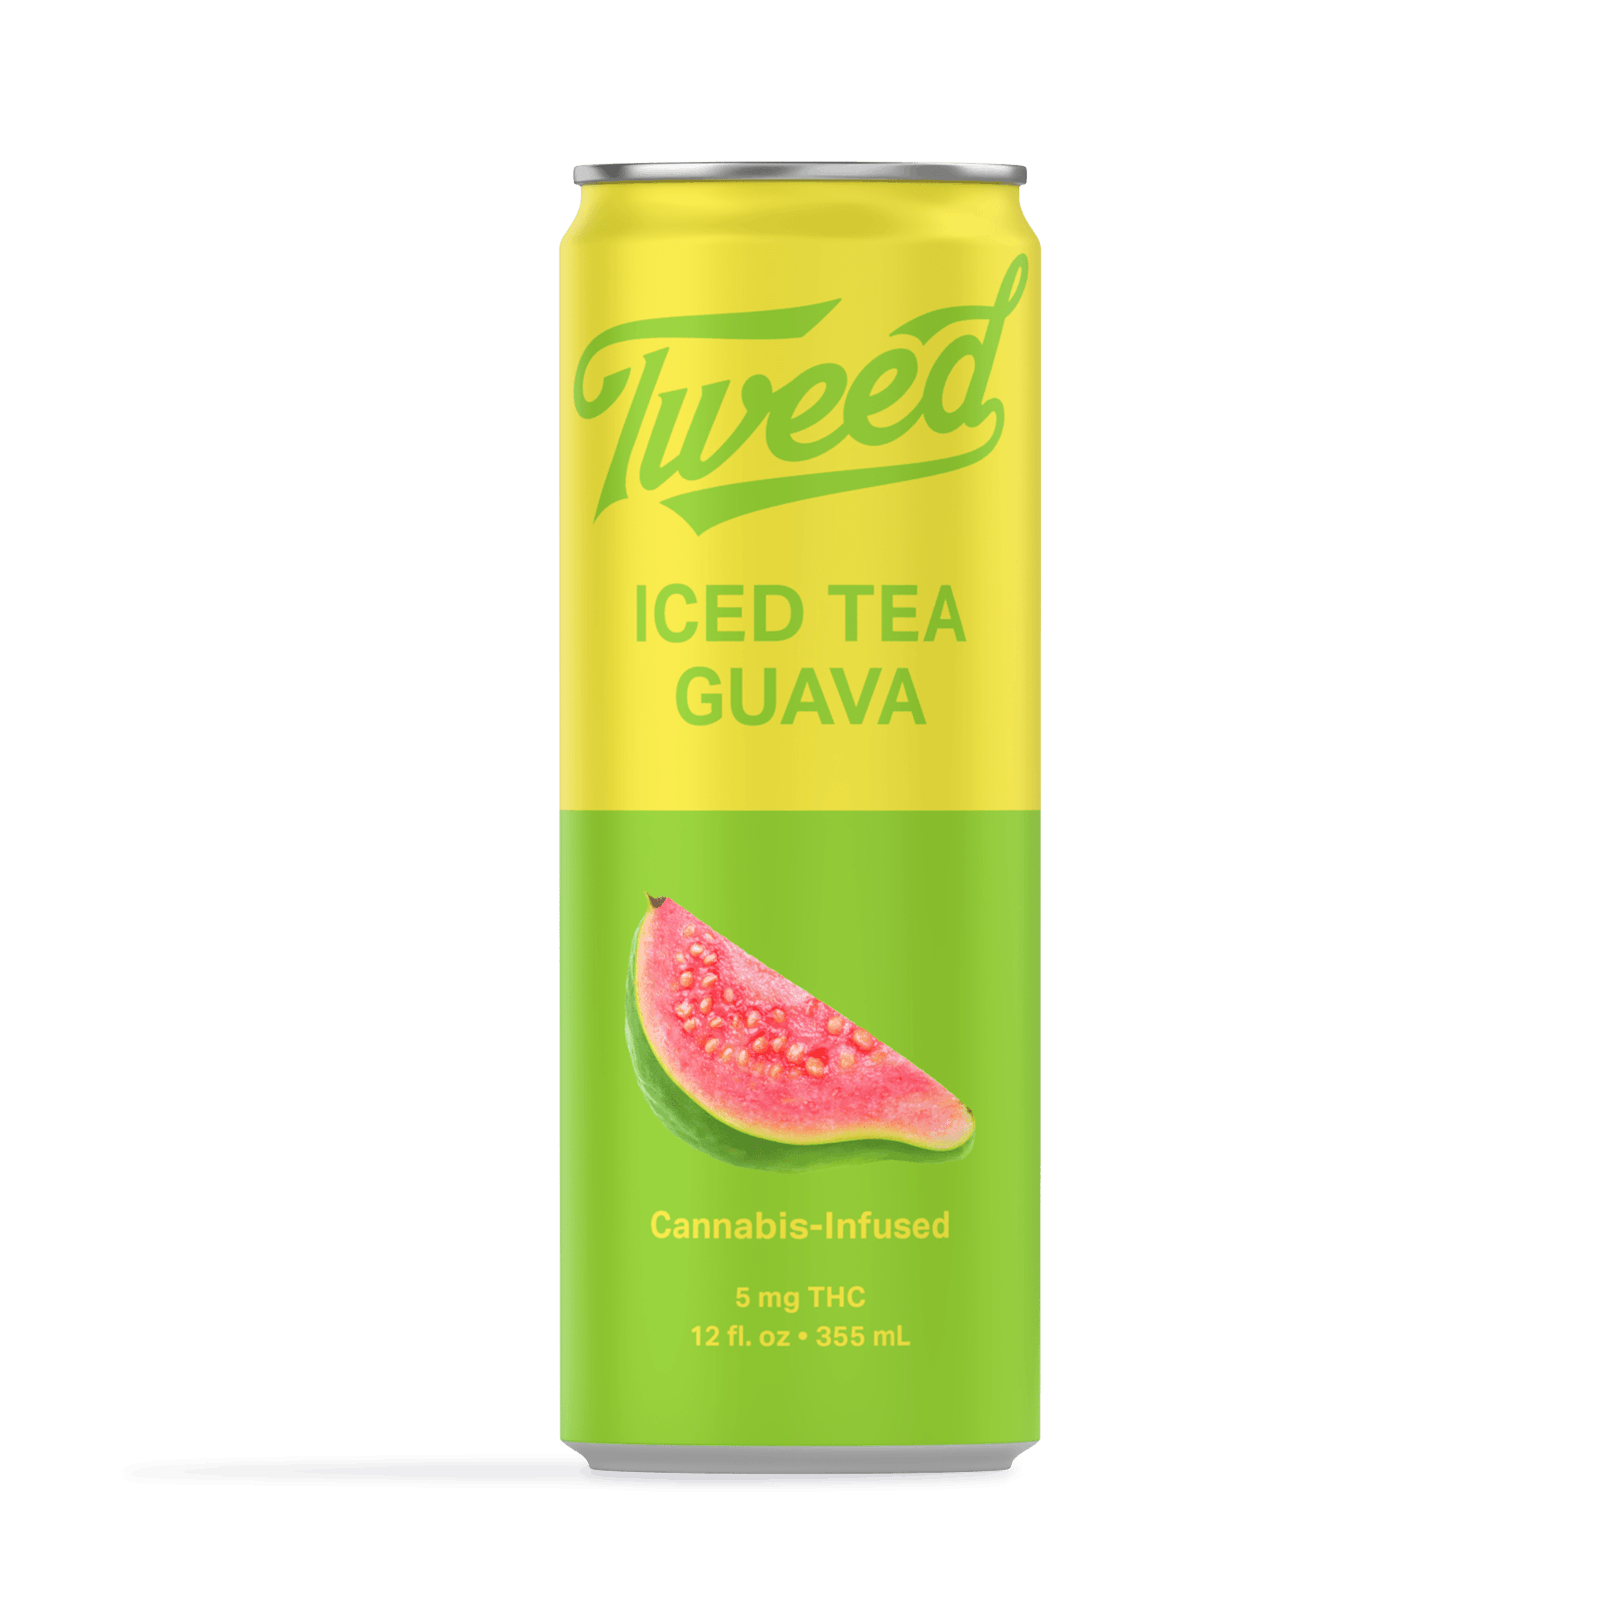 Iced Tea Guava